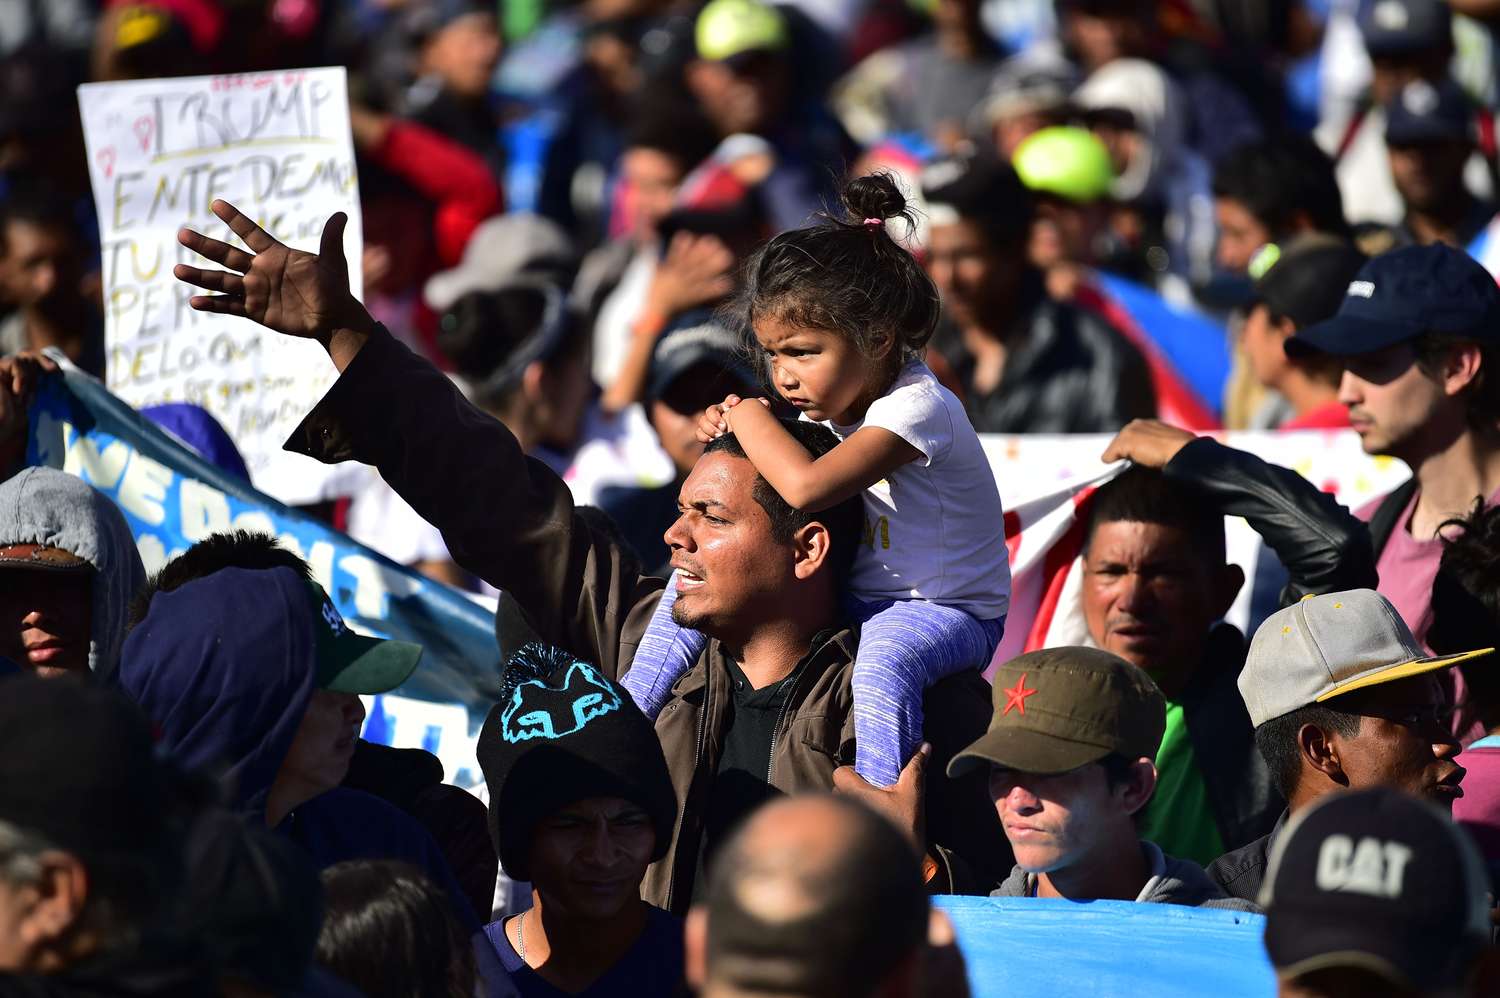 Desesperados, miles de centroamericanos reclamaban ser recibidos en Estados Unidos